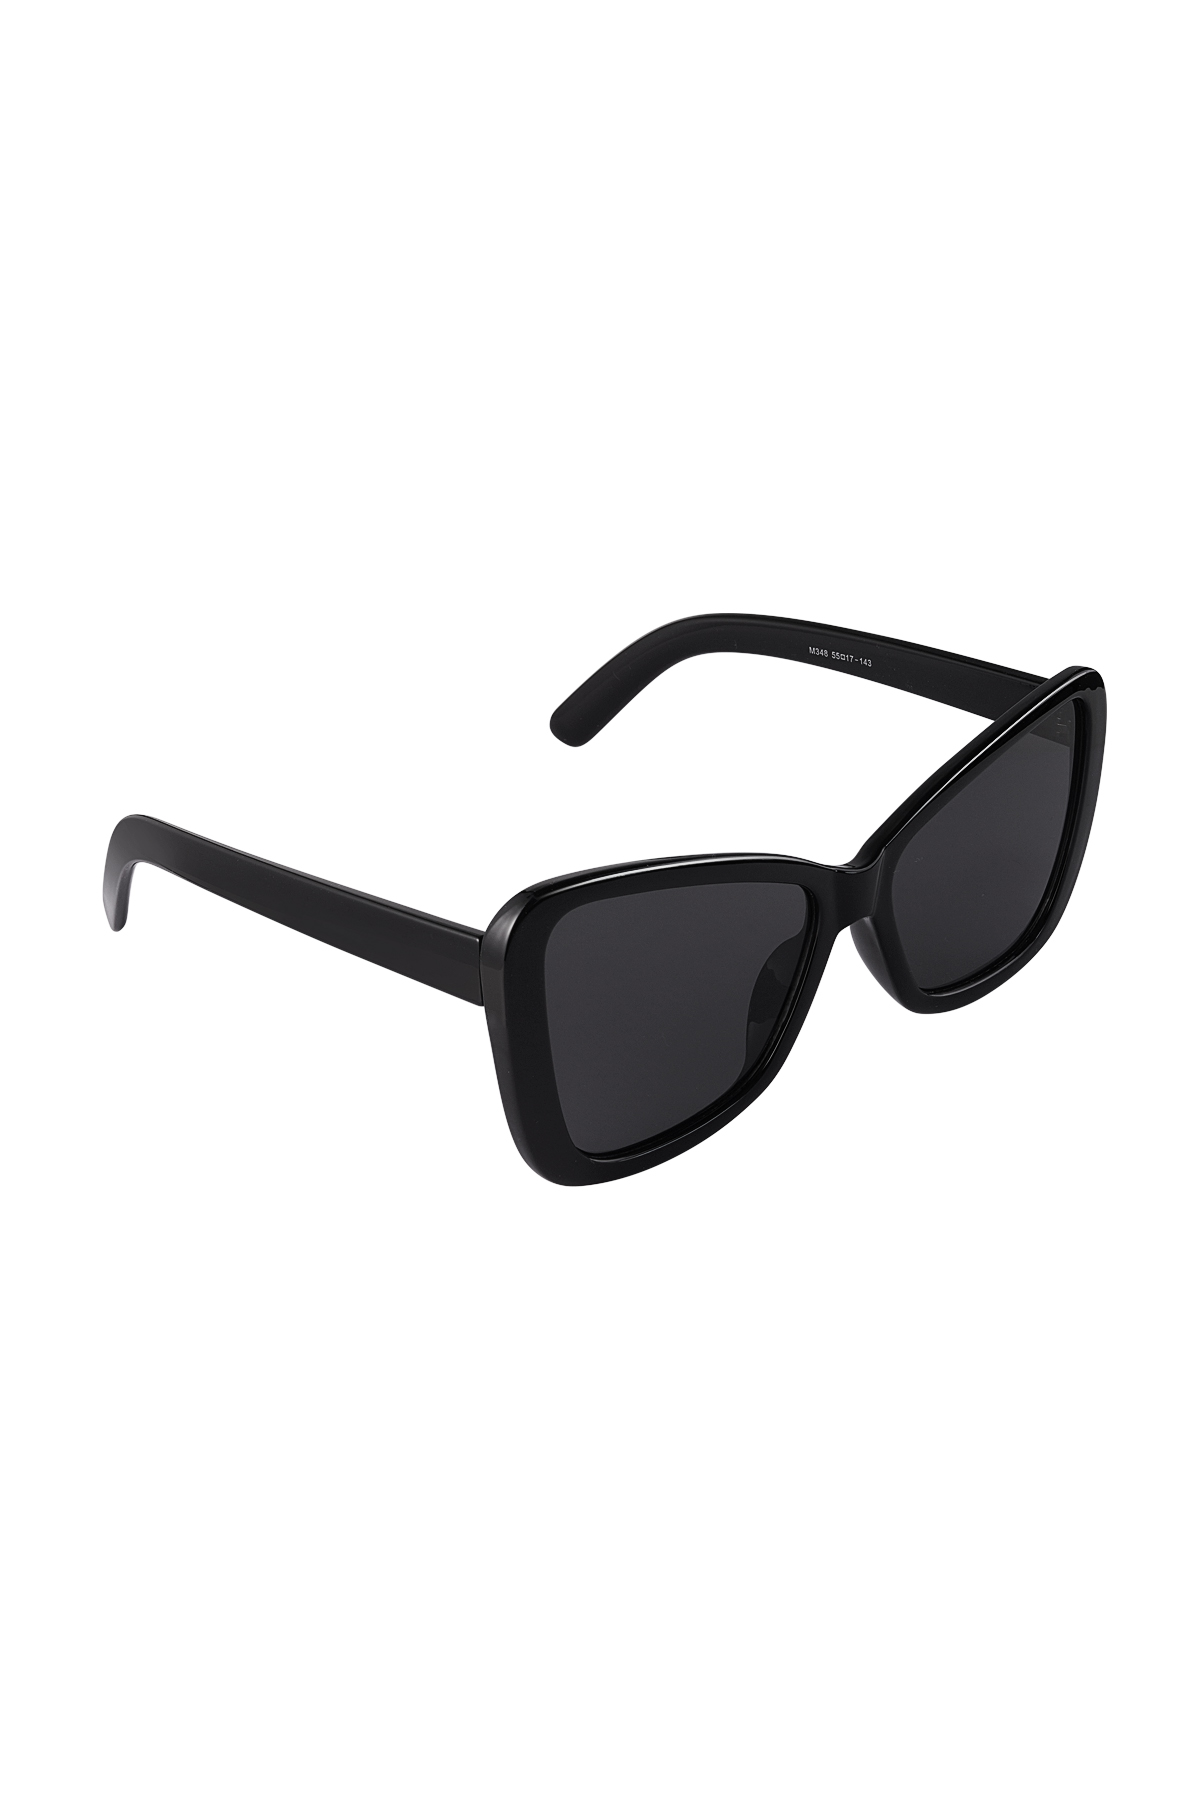 Sunglasses cat eye simple - black